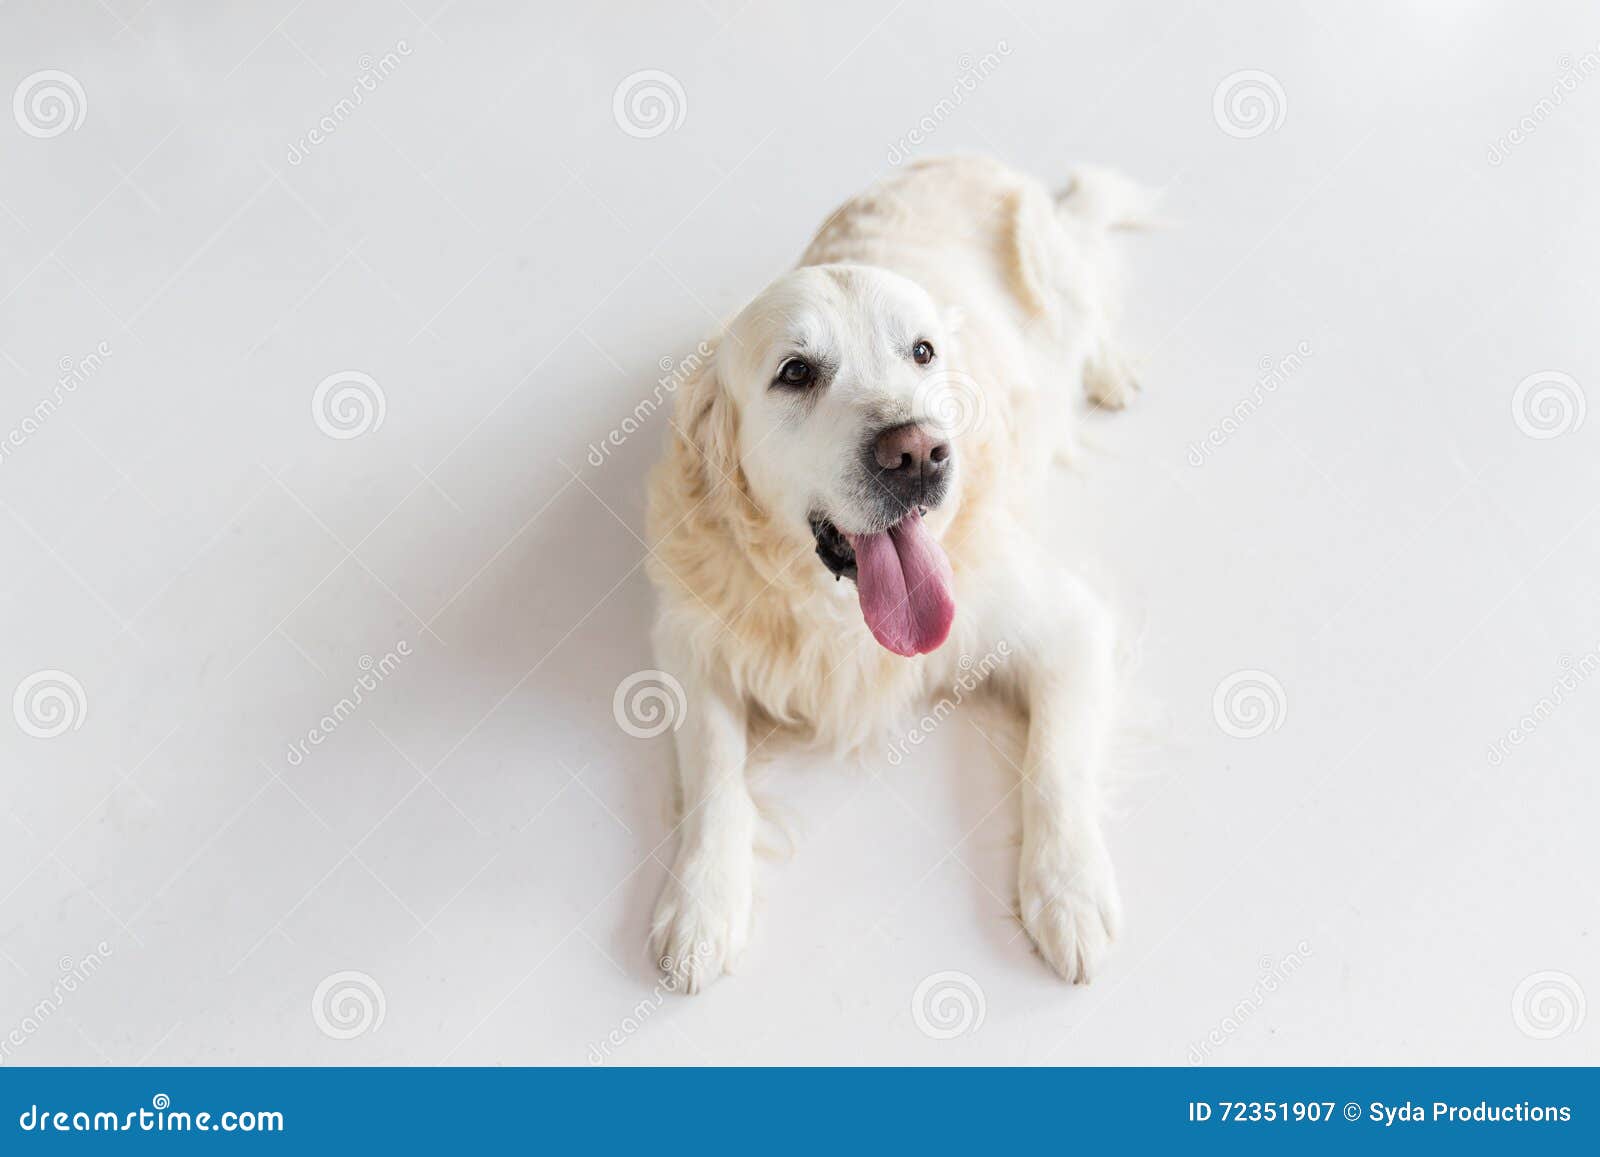 close up of golden retriever dog lying on floor